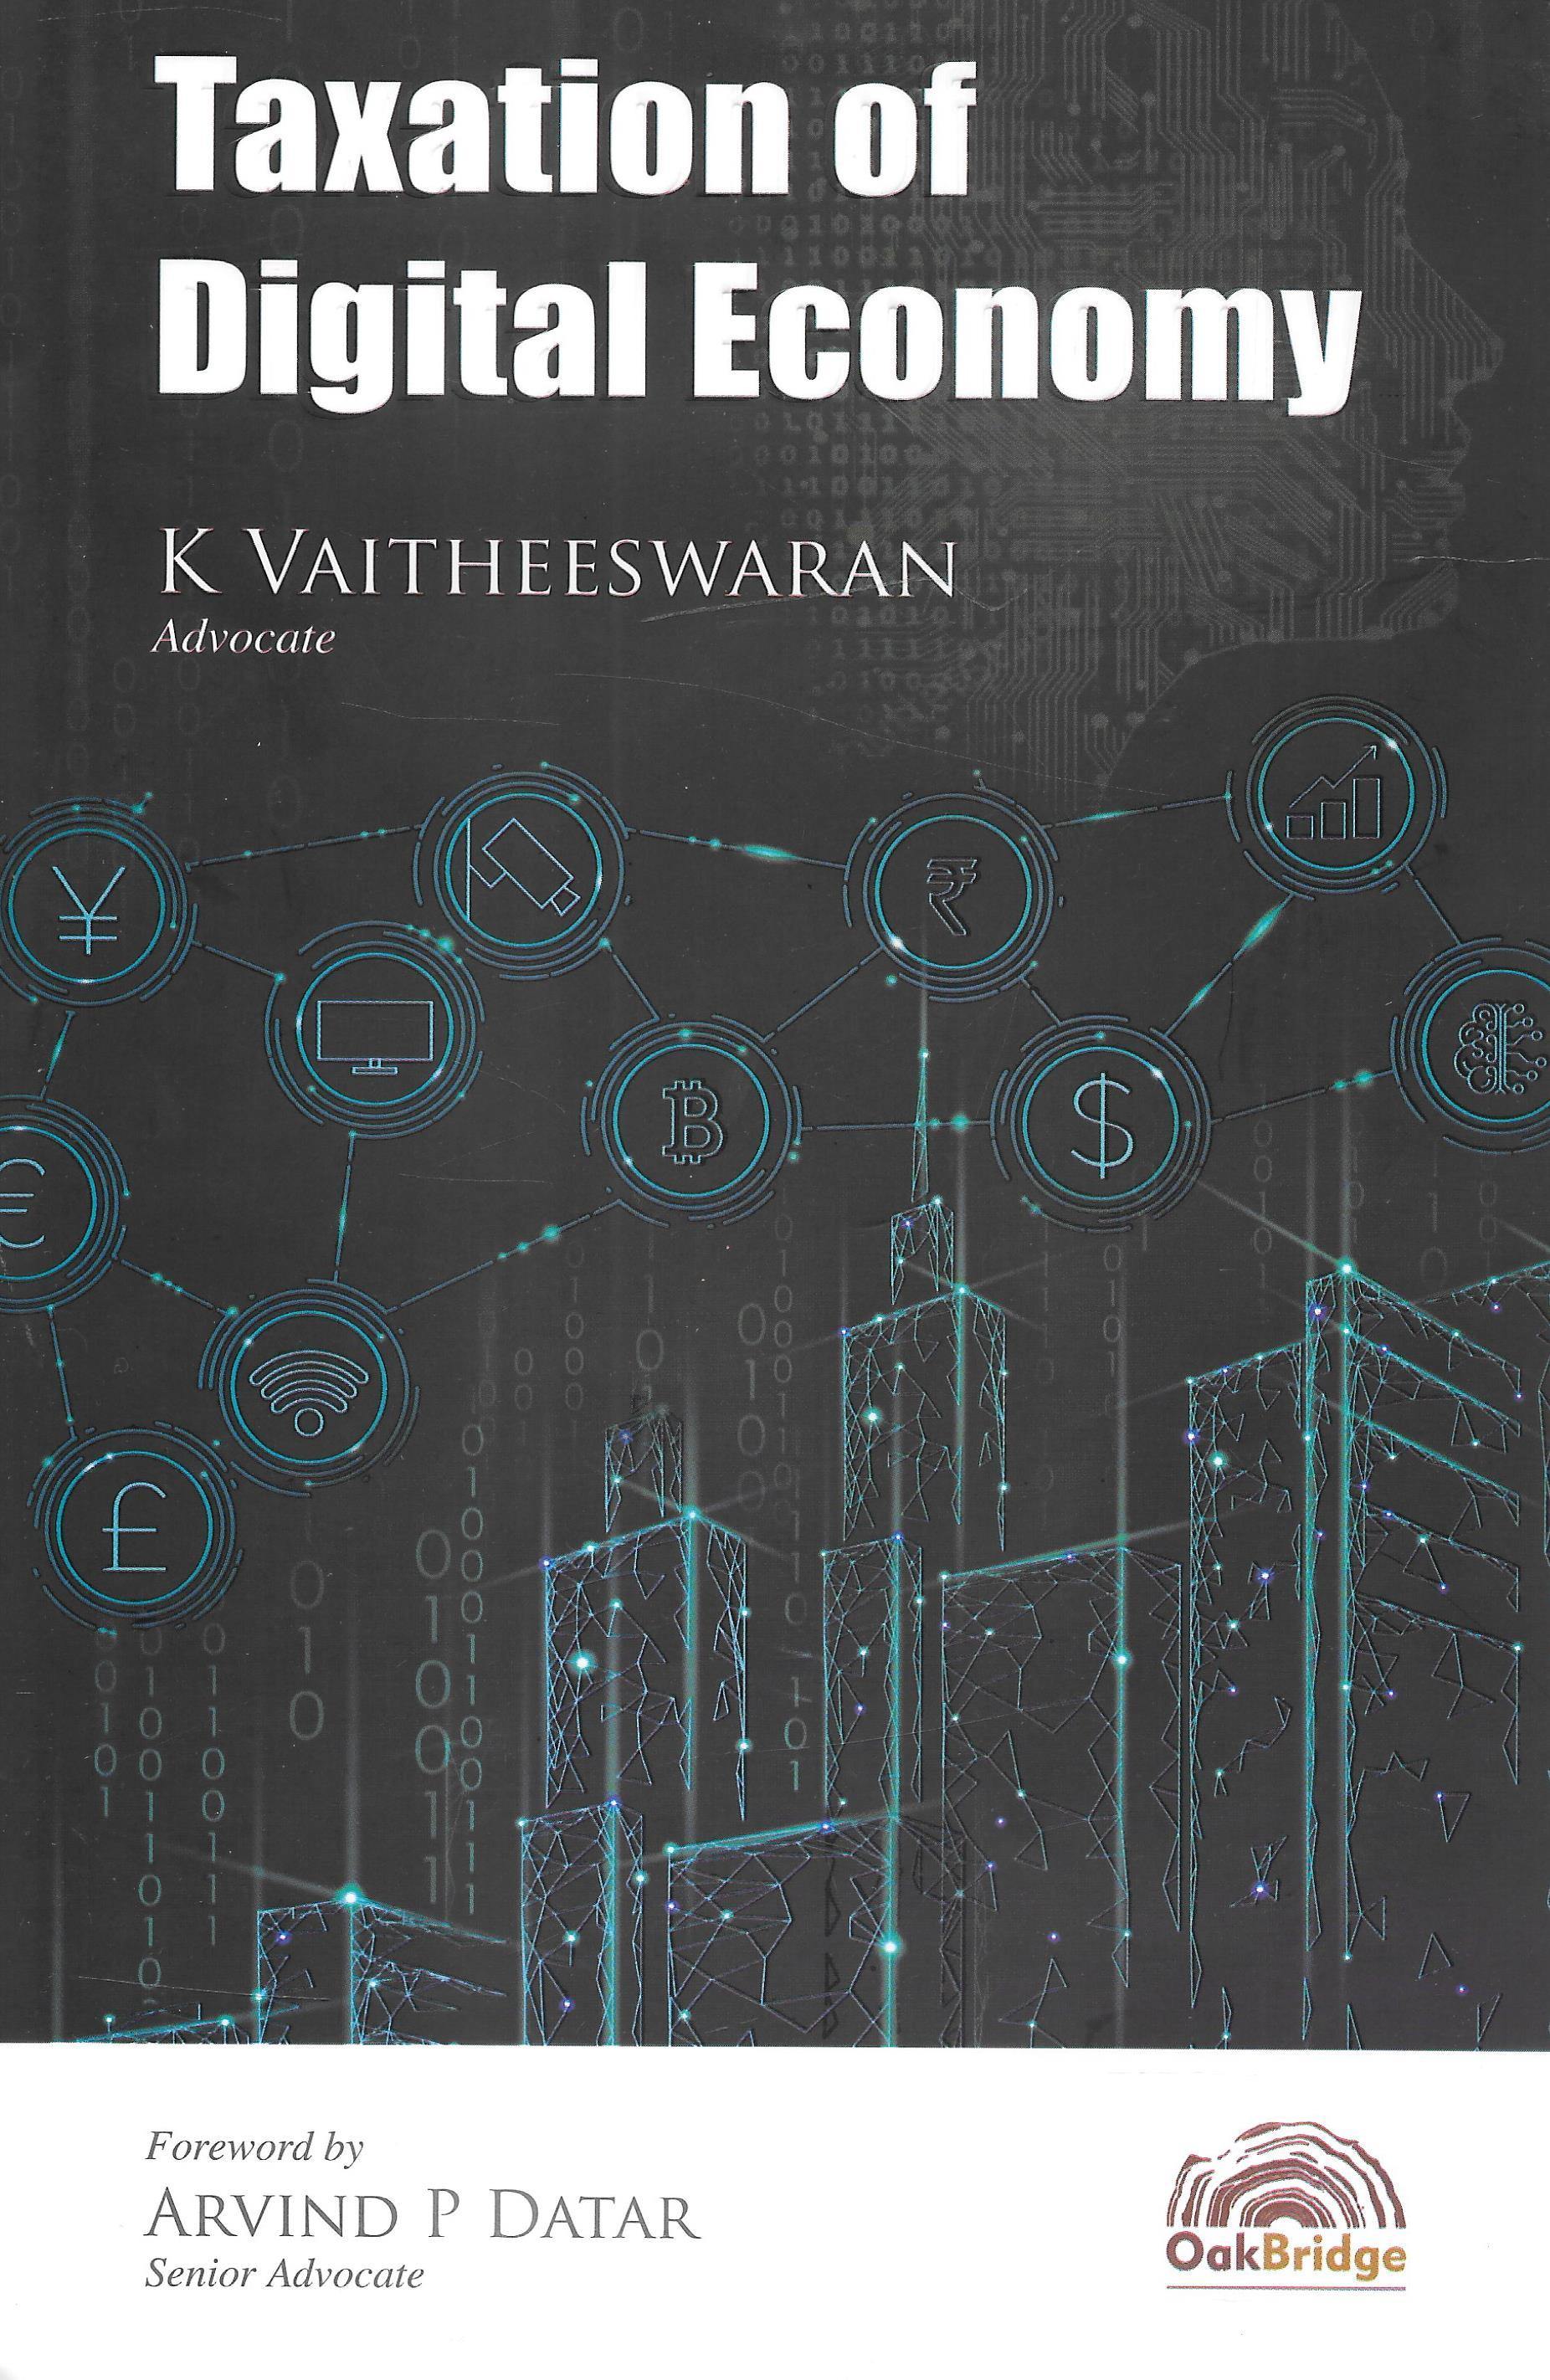 Taxation of Digital Economy by K Vaitheeswaran